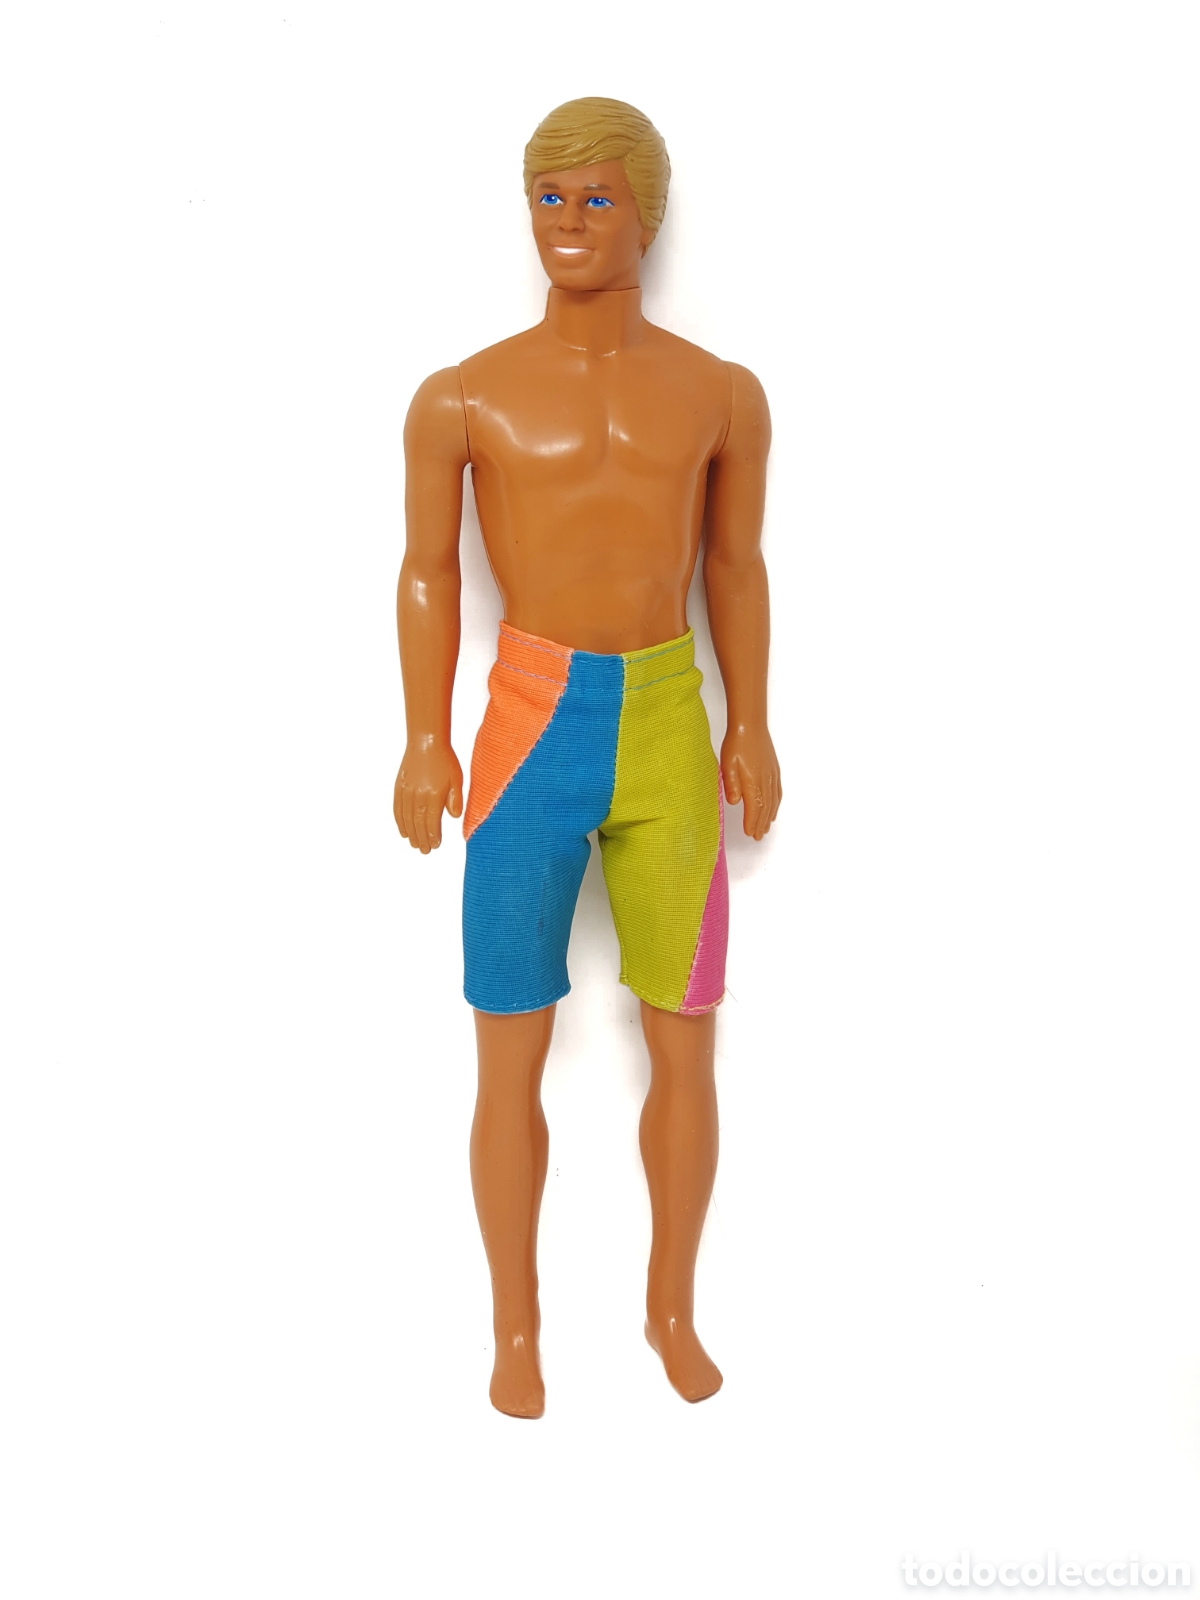 Wet 'n Wild Ken Doll #4104 Mattel 1989 NIB Swim Trunks and Muscle T-shirt